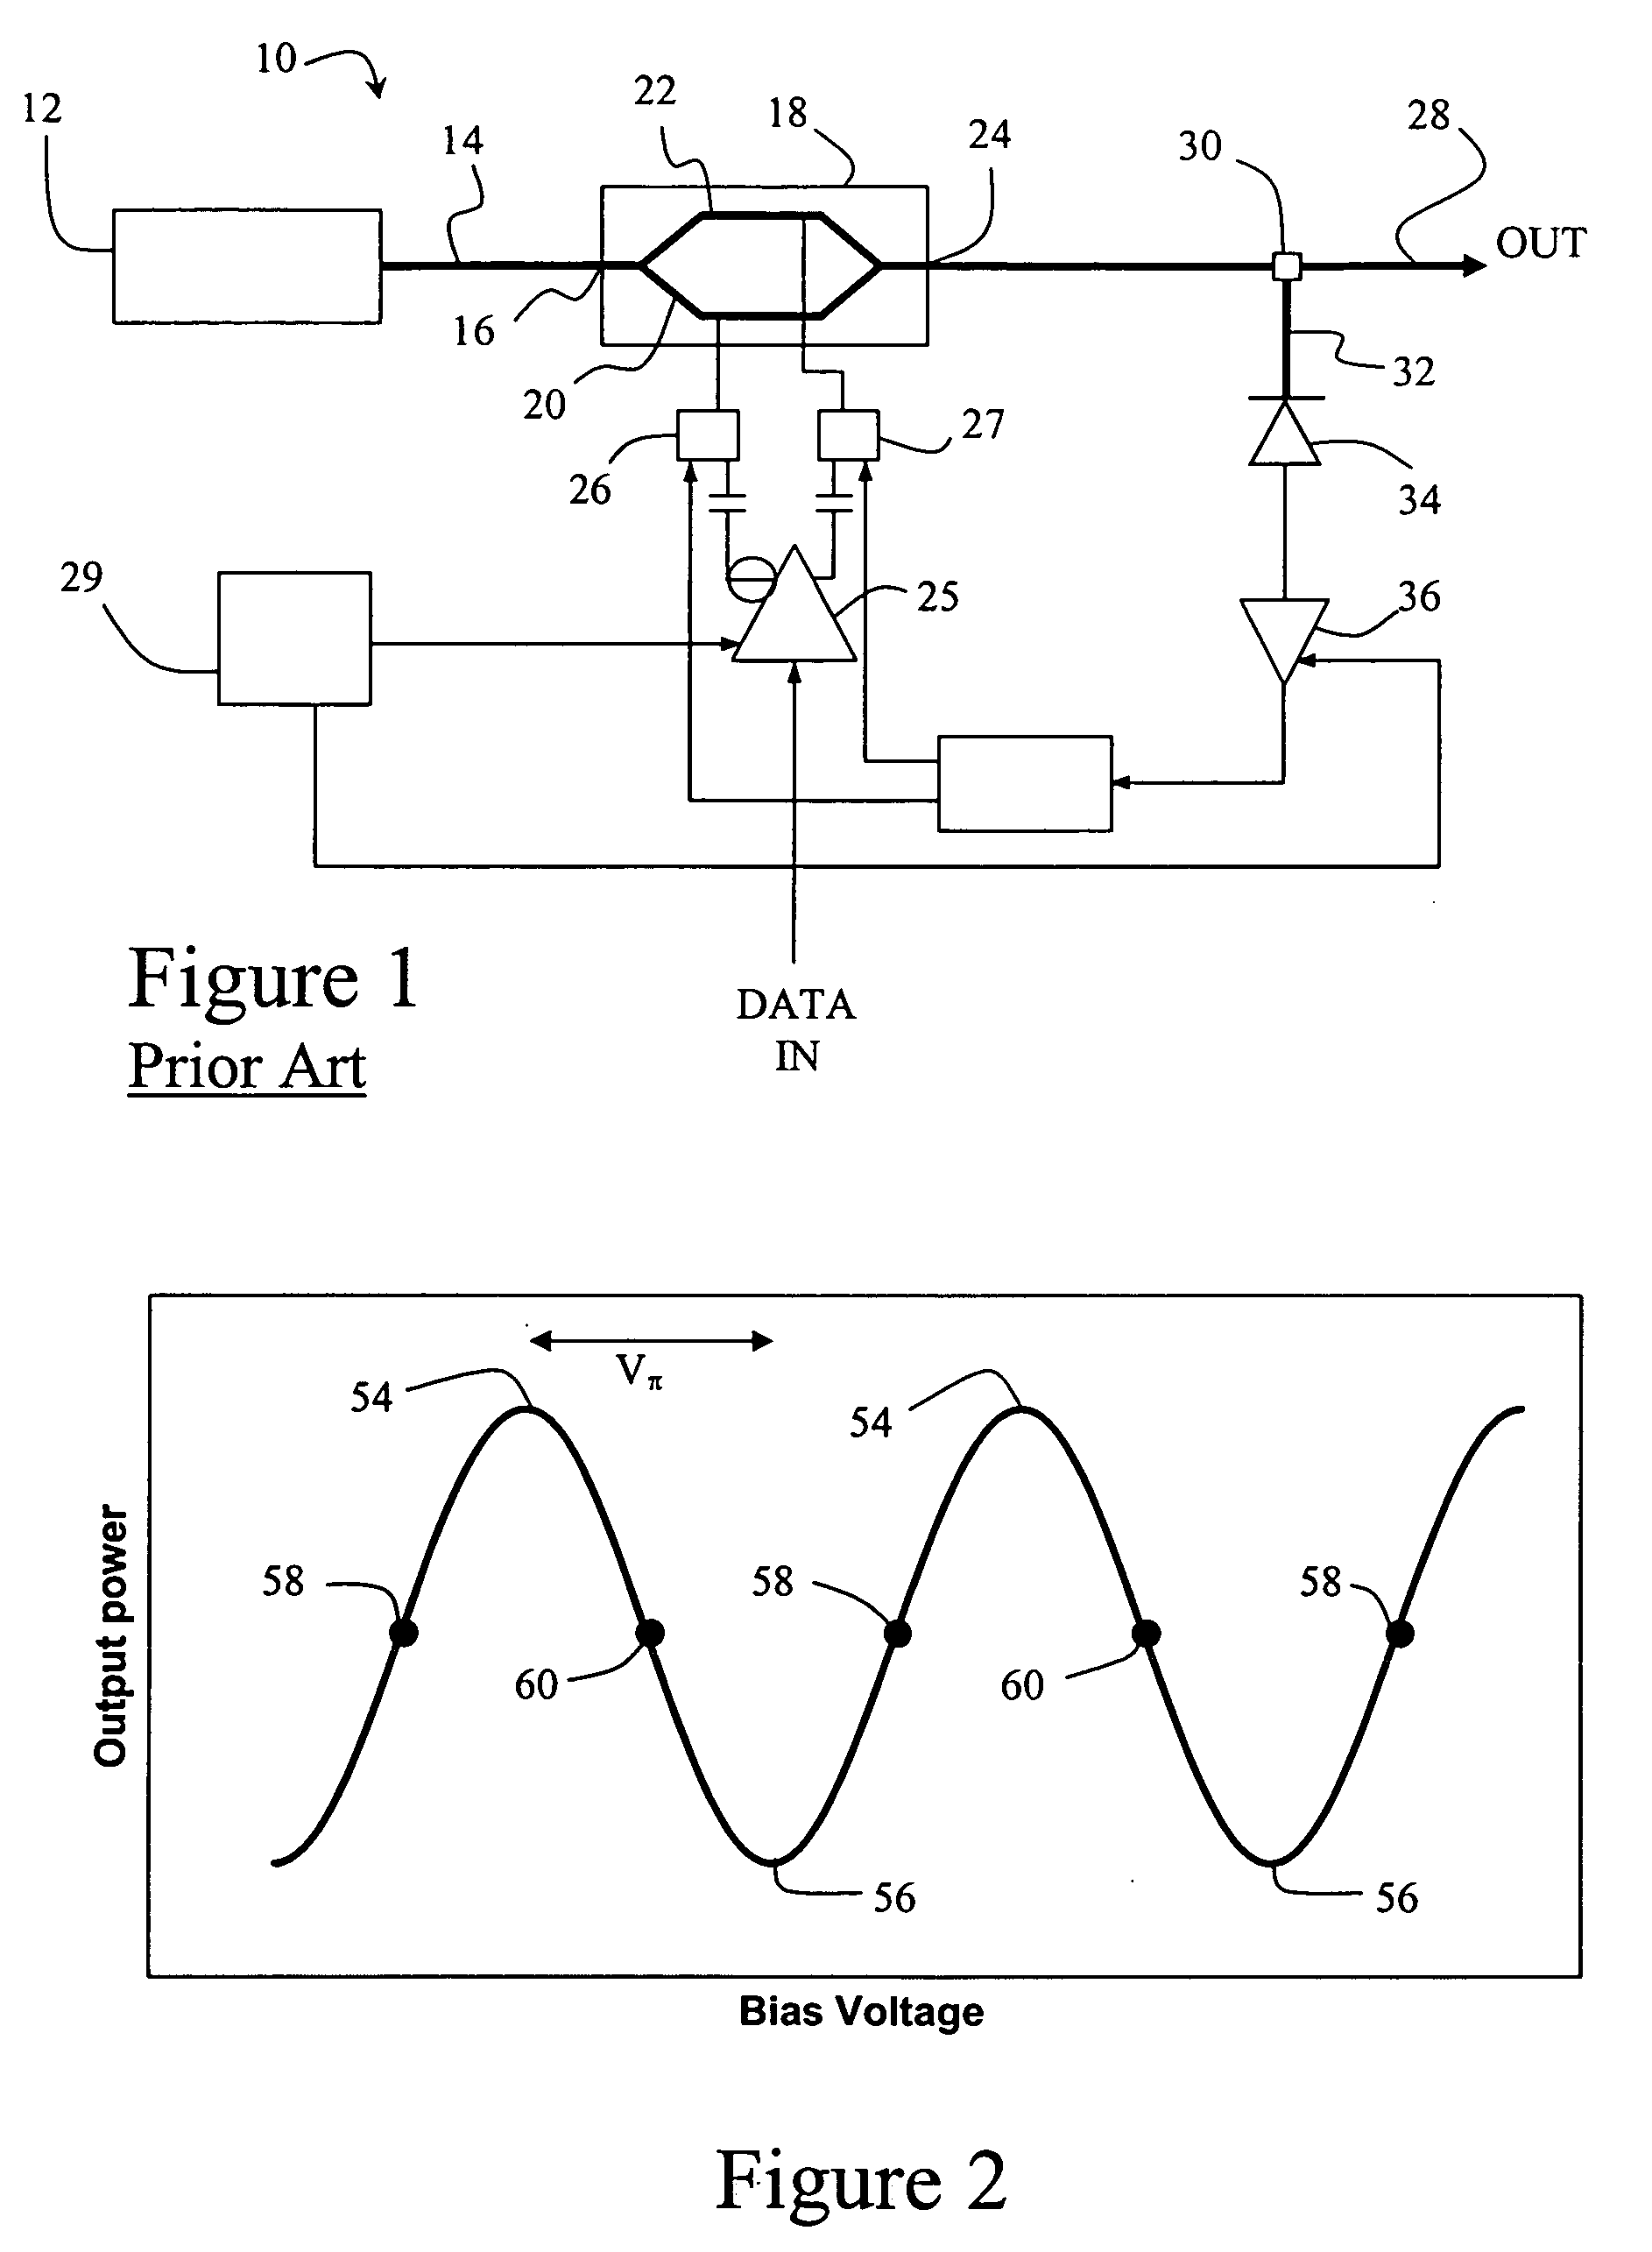 Automatic bias control for an optical modulator